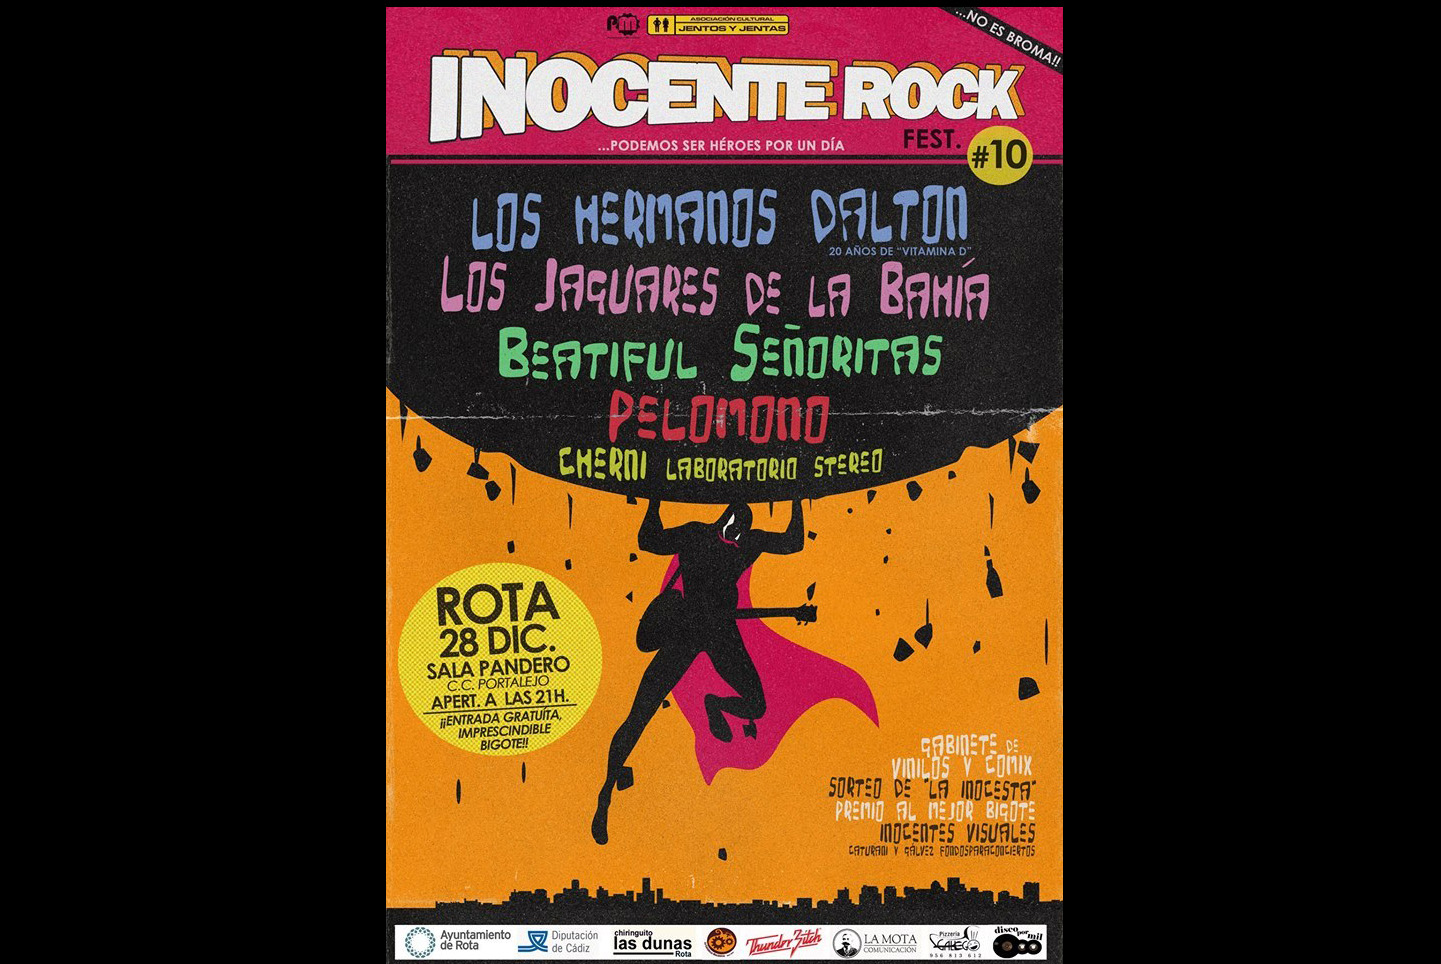 INOCENTE ROCK Festival #10 Miércoles 28 de diciembre en Rota – Cádiz